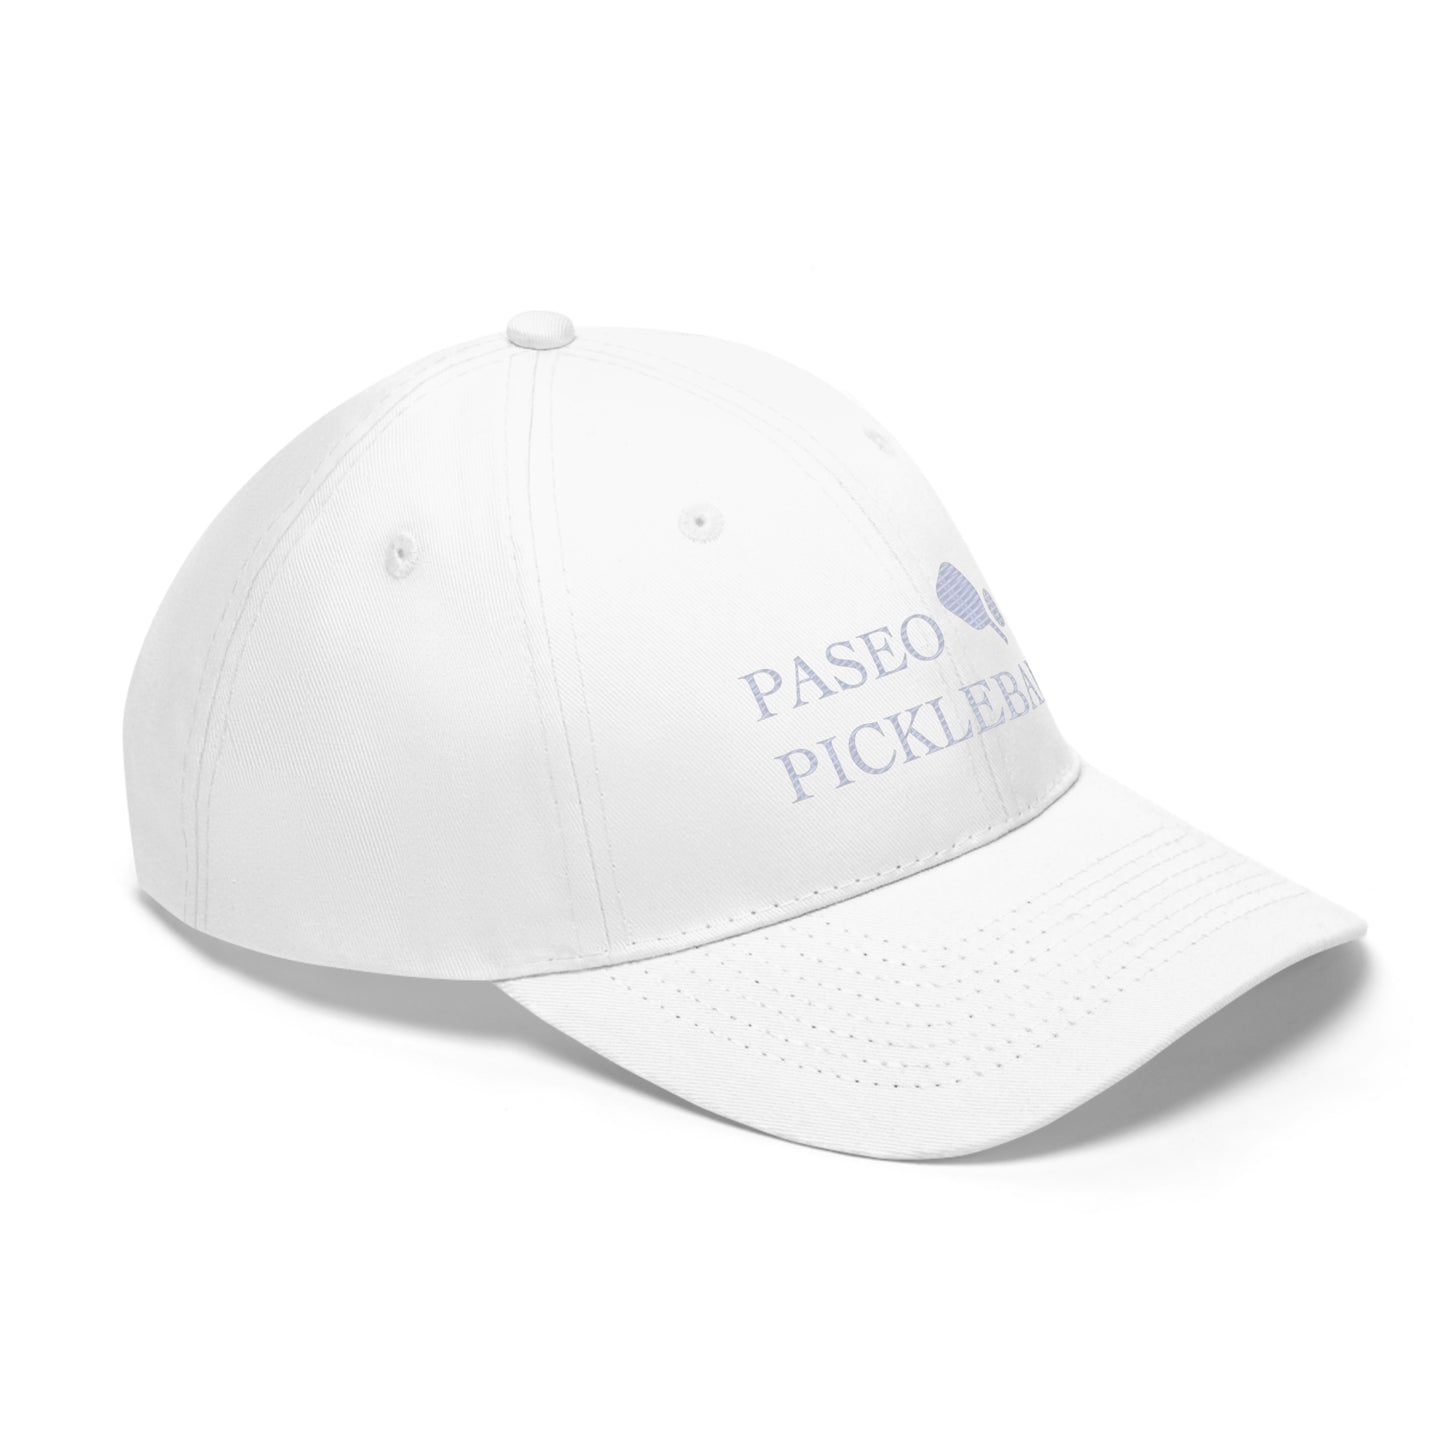 Club Pickleball Hat